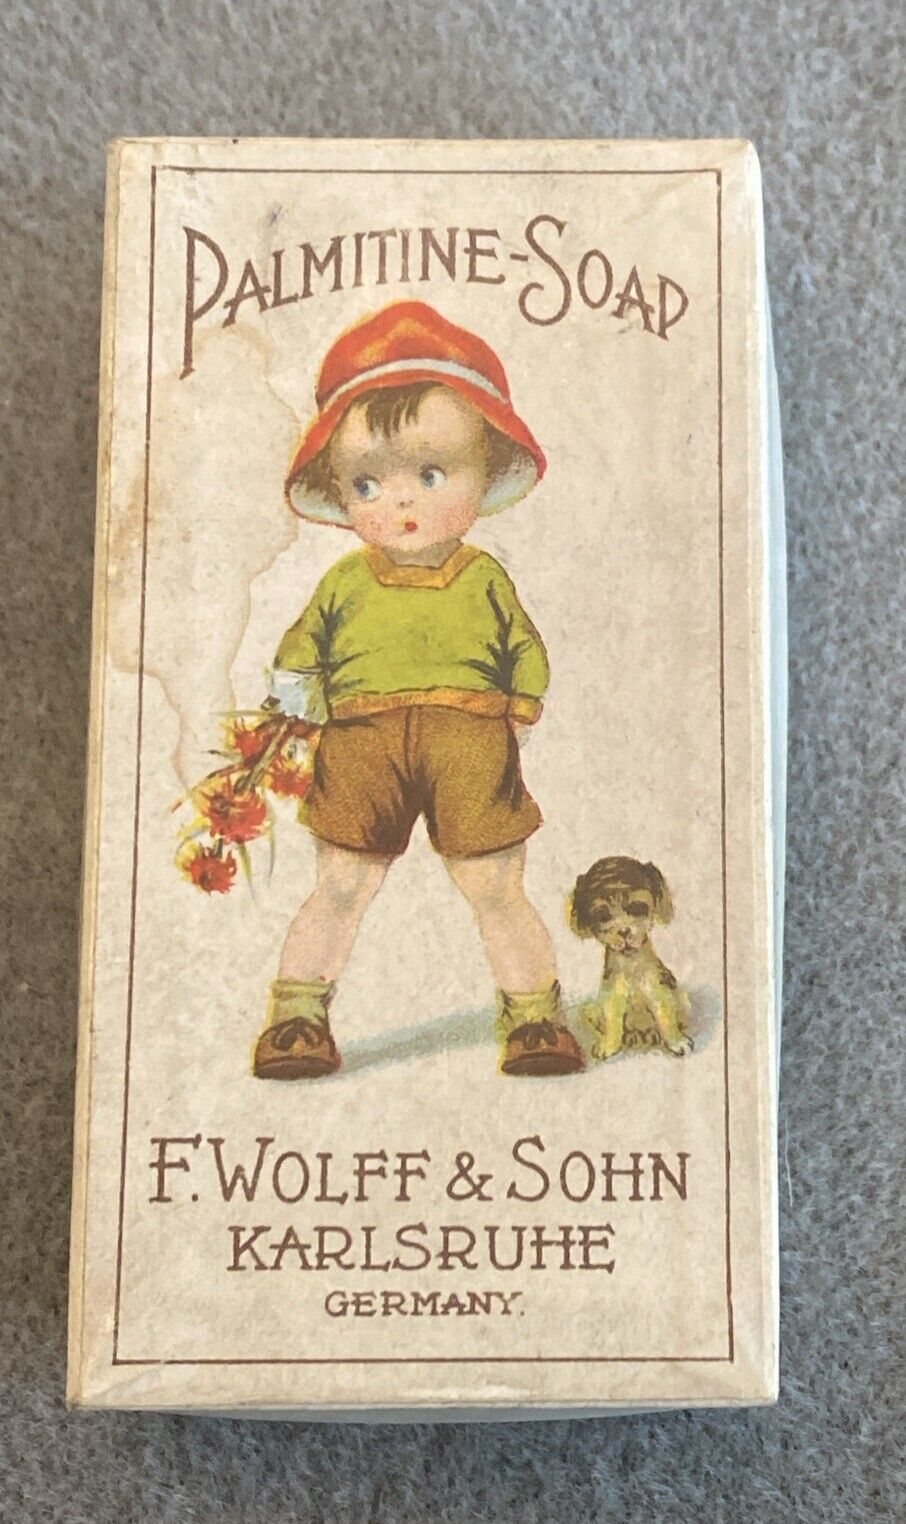 Antique Palmitine Soap F. Wolff & Sohn Karlsruhe Germany, Original Box, Cute